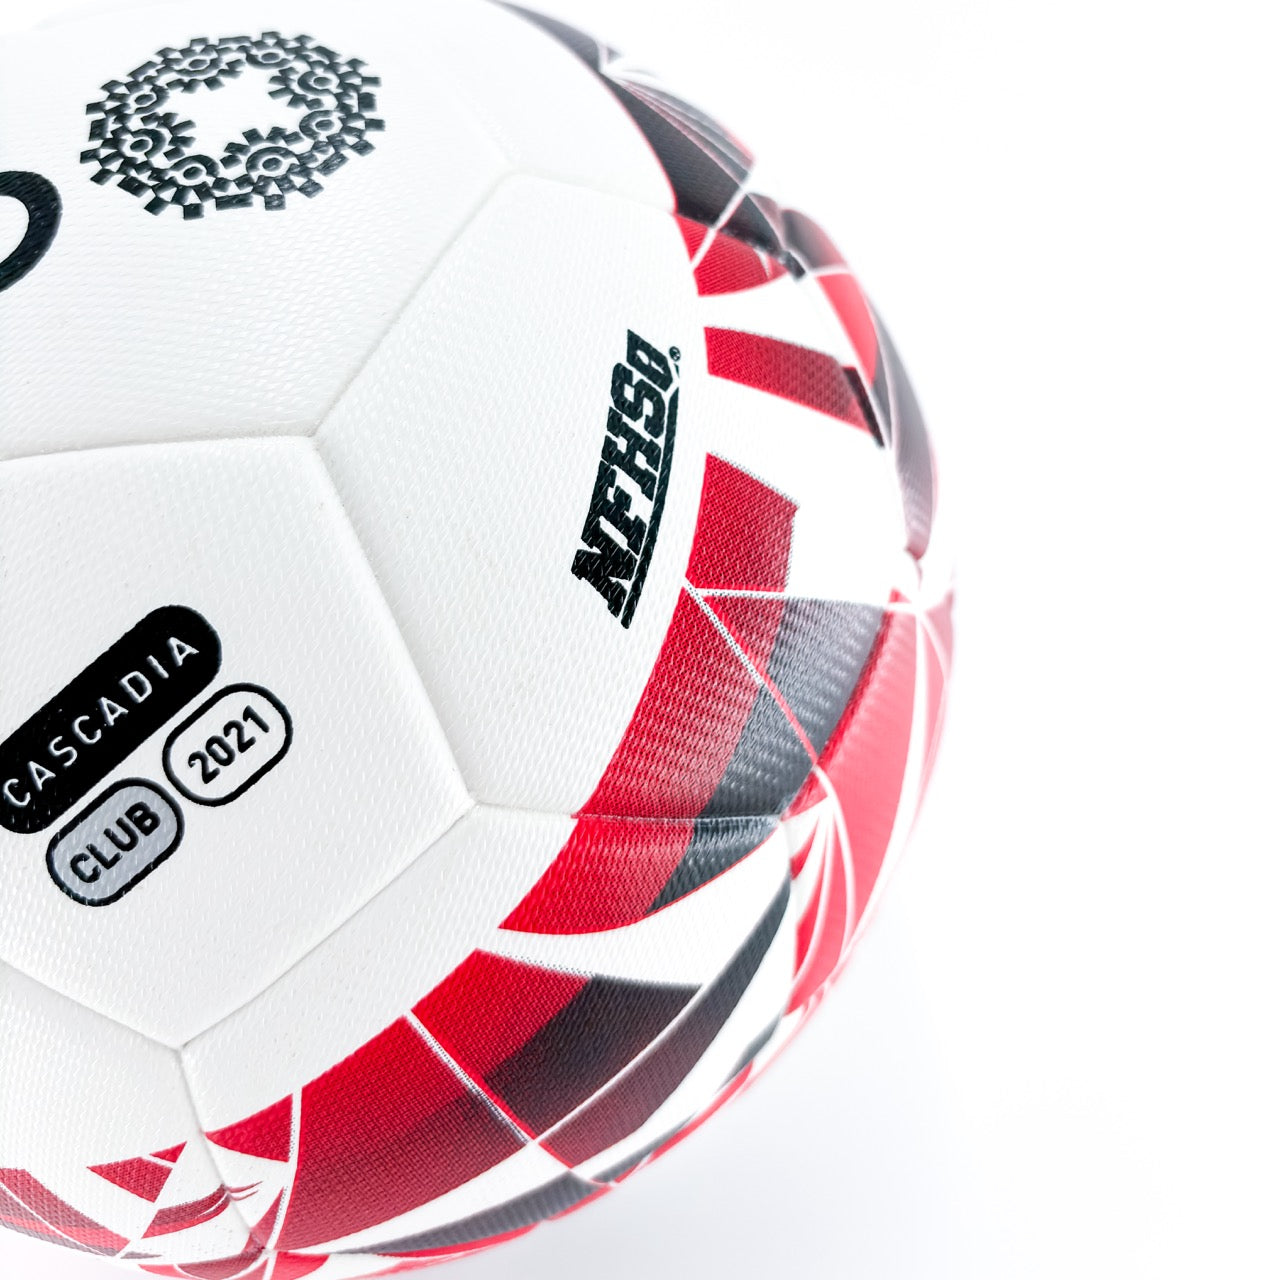 Cascadia NFHS Soccer Ball - Colligo